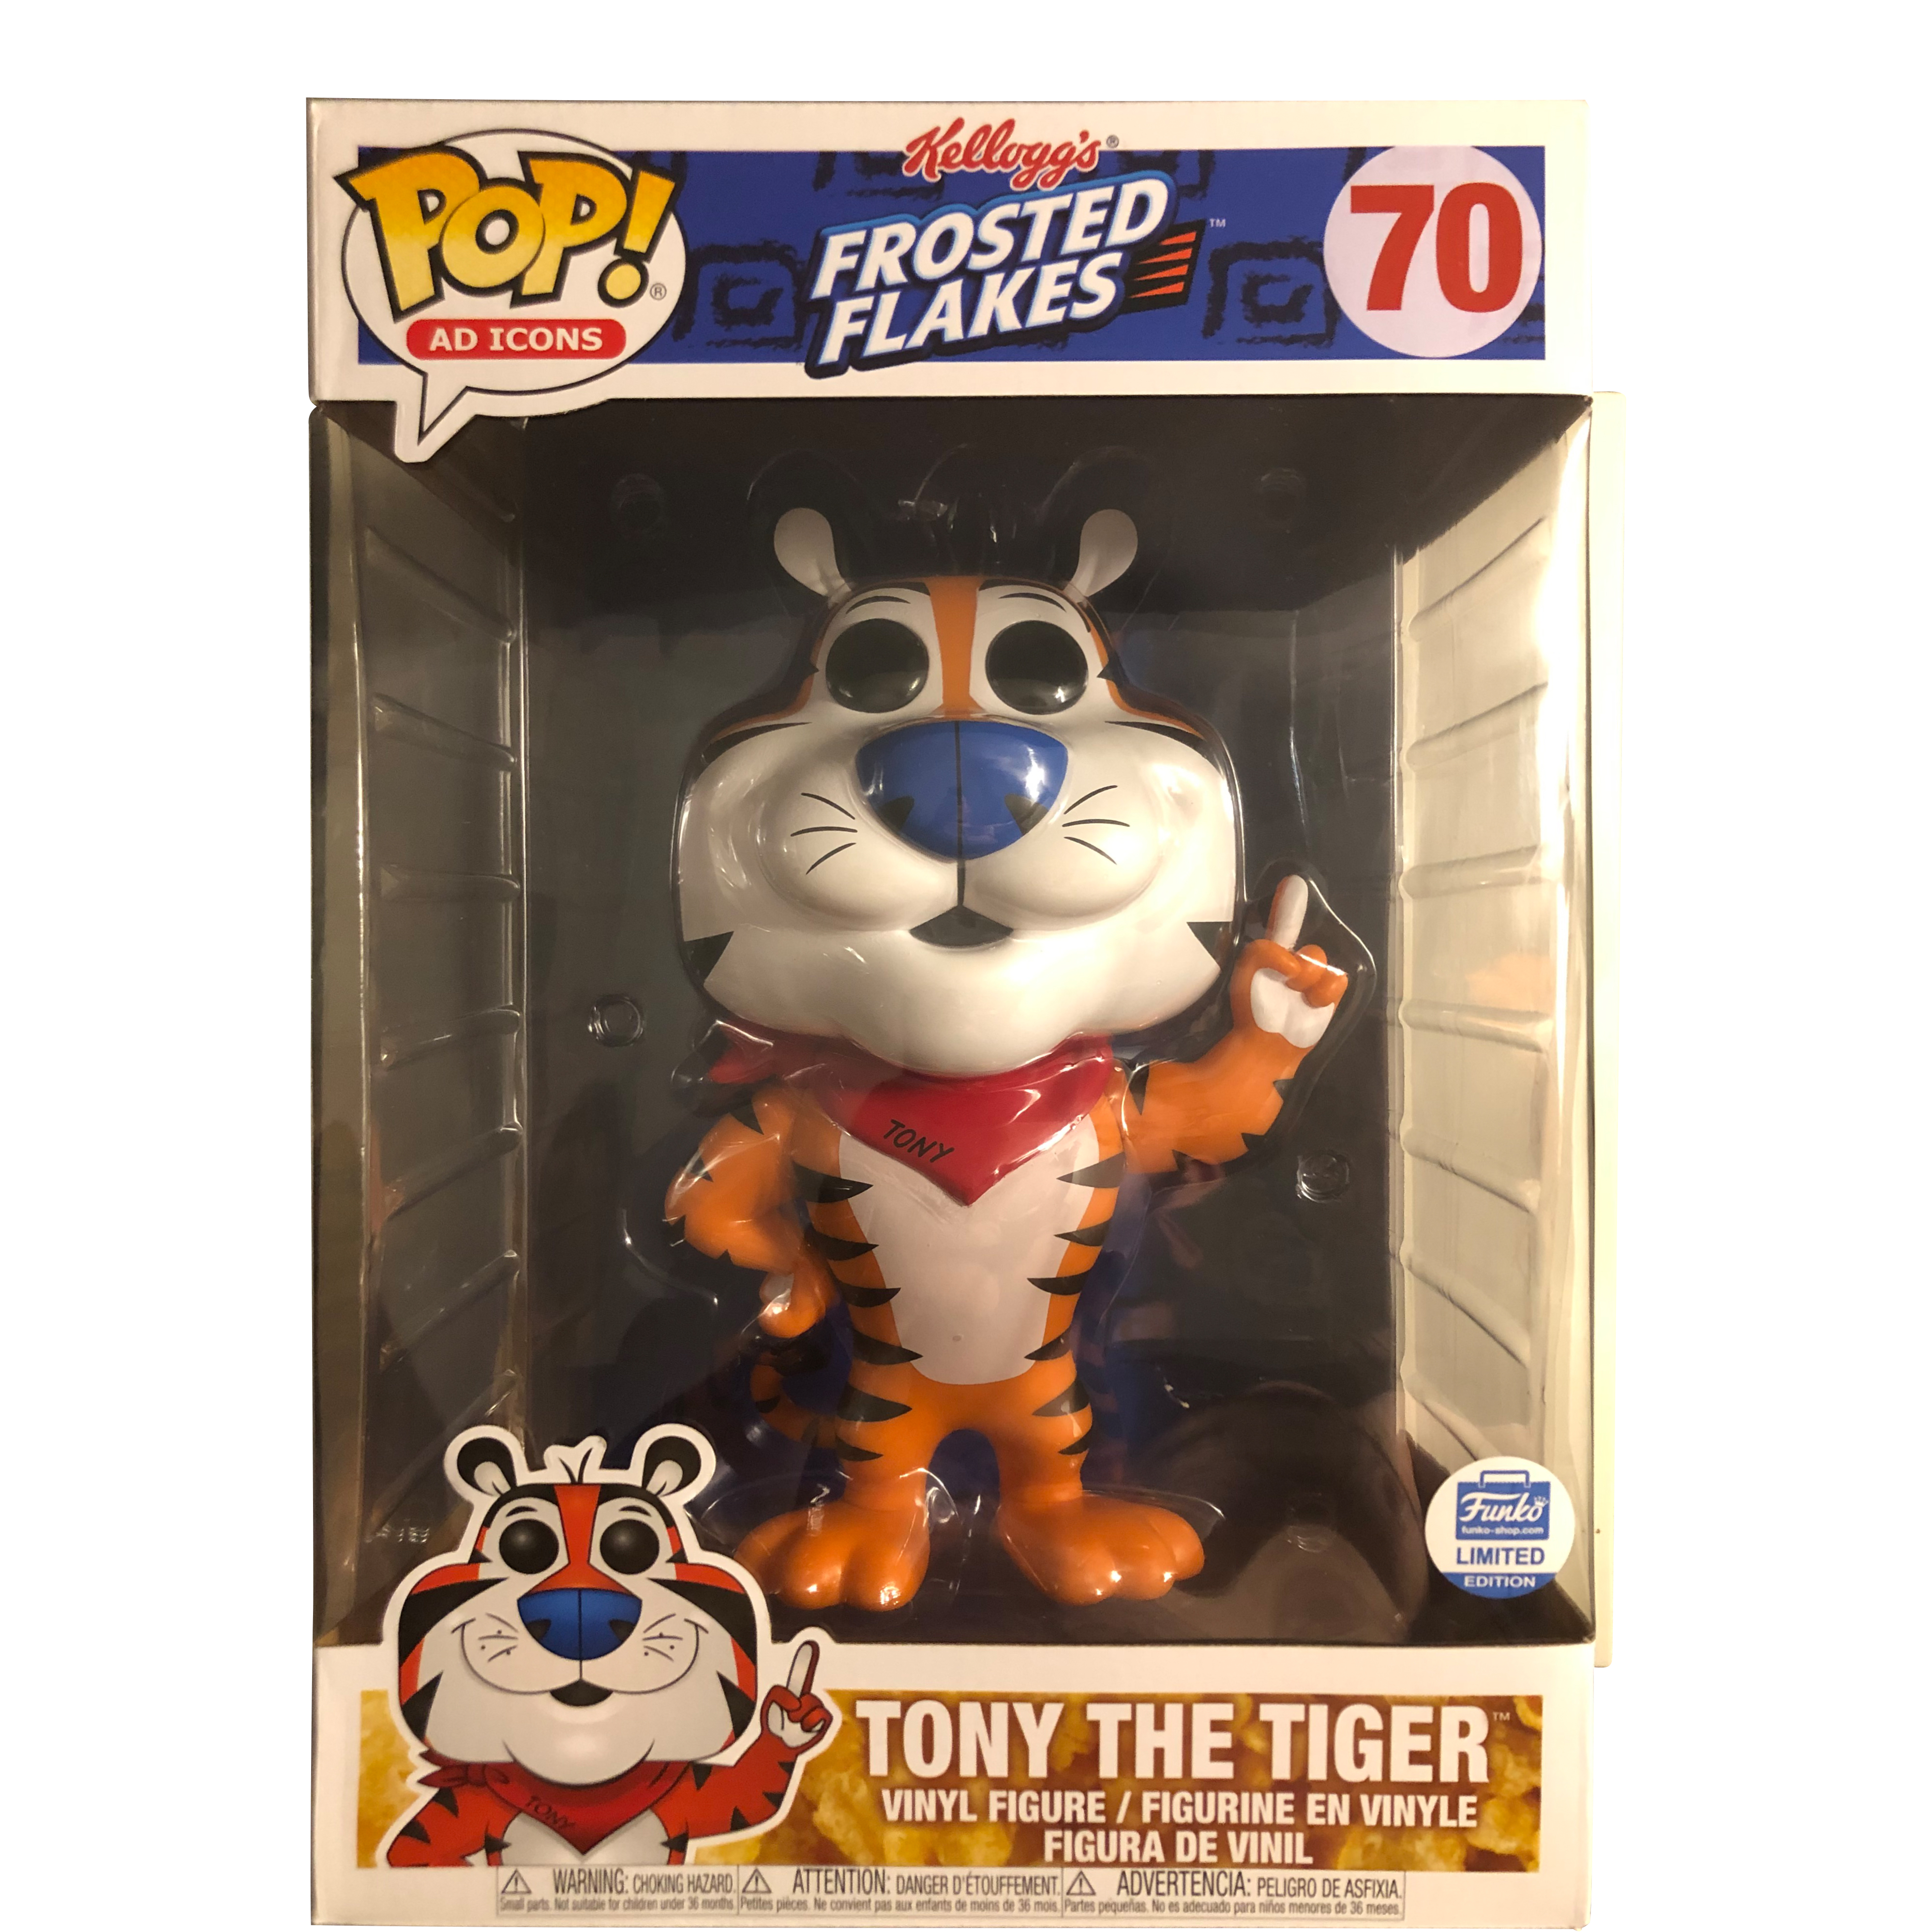 Toy New Keychain: Ad Icons Funko Pop Tony The Tiger 